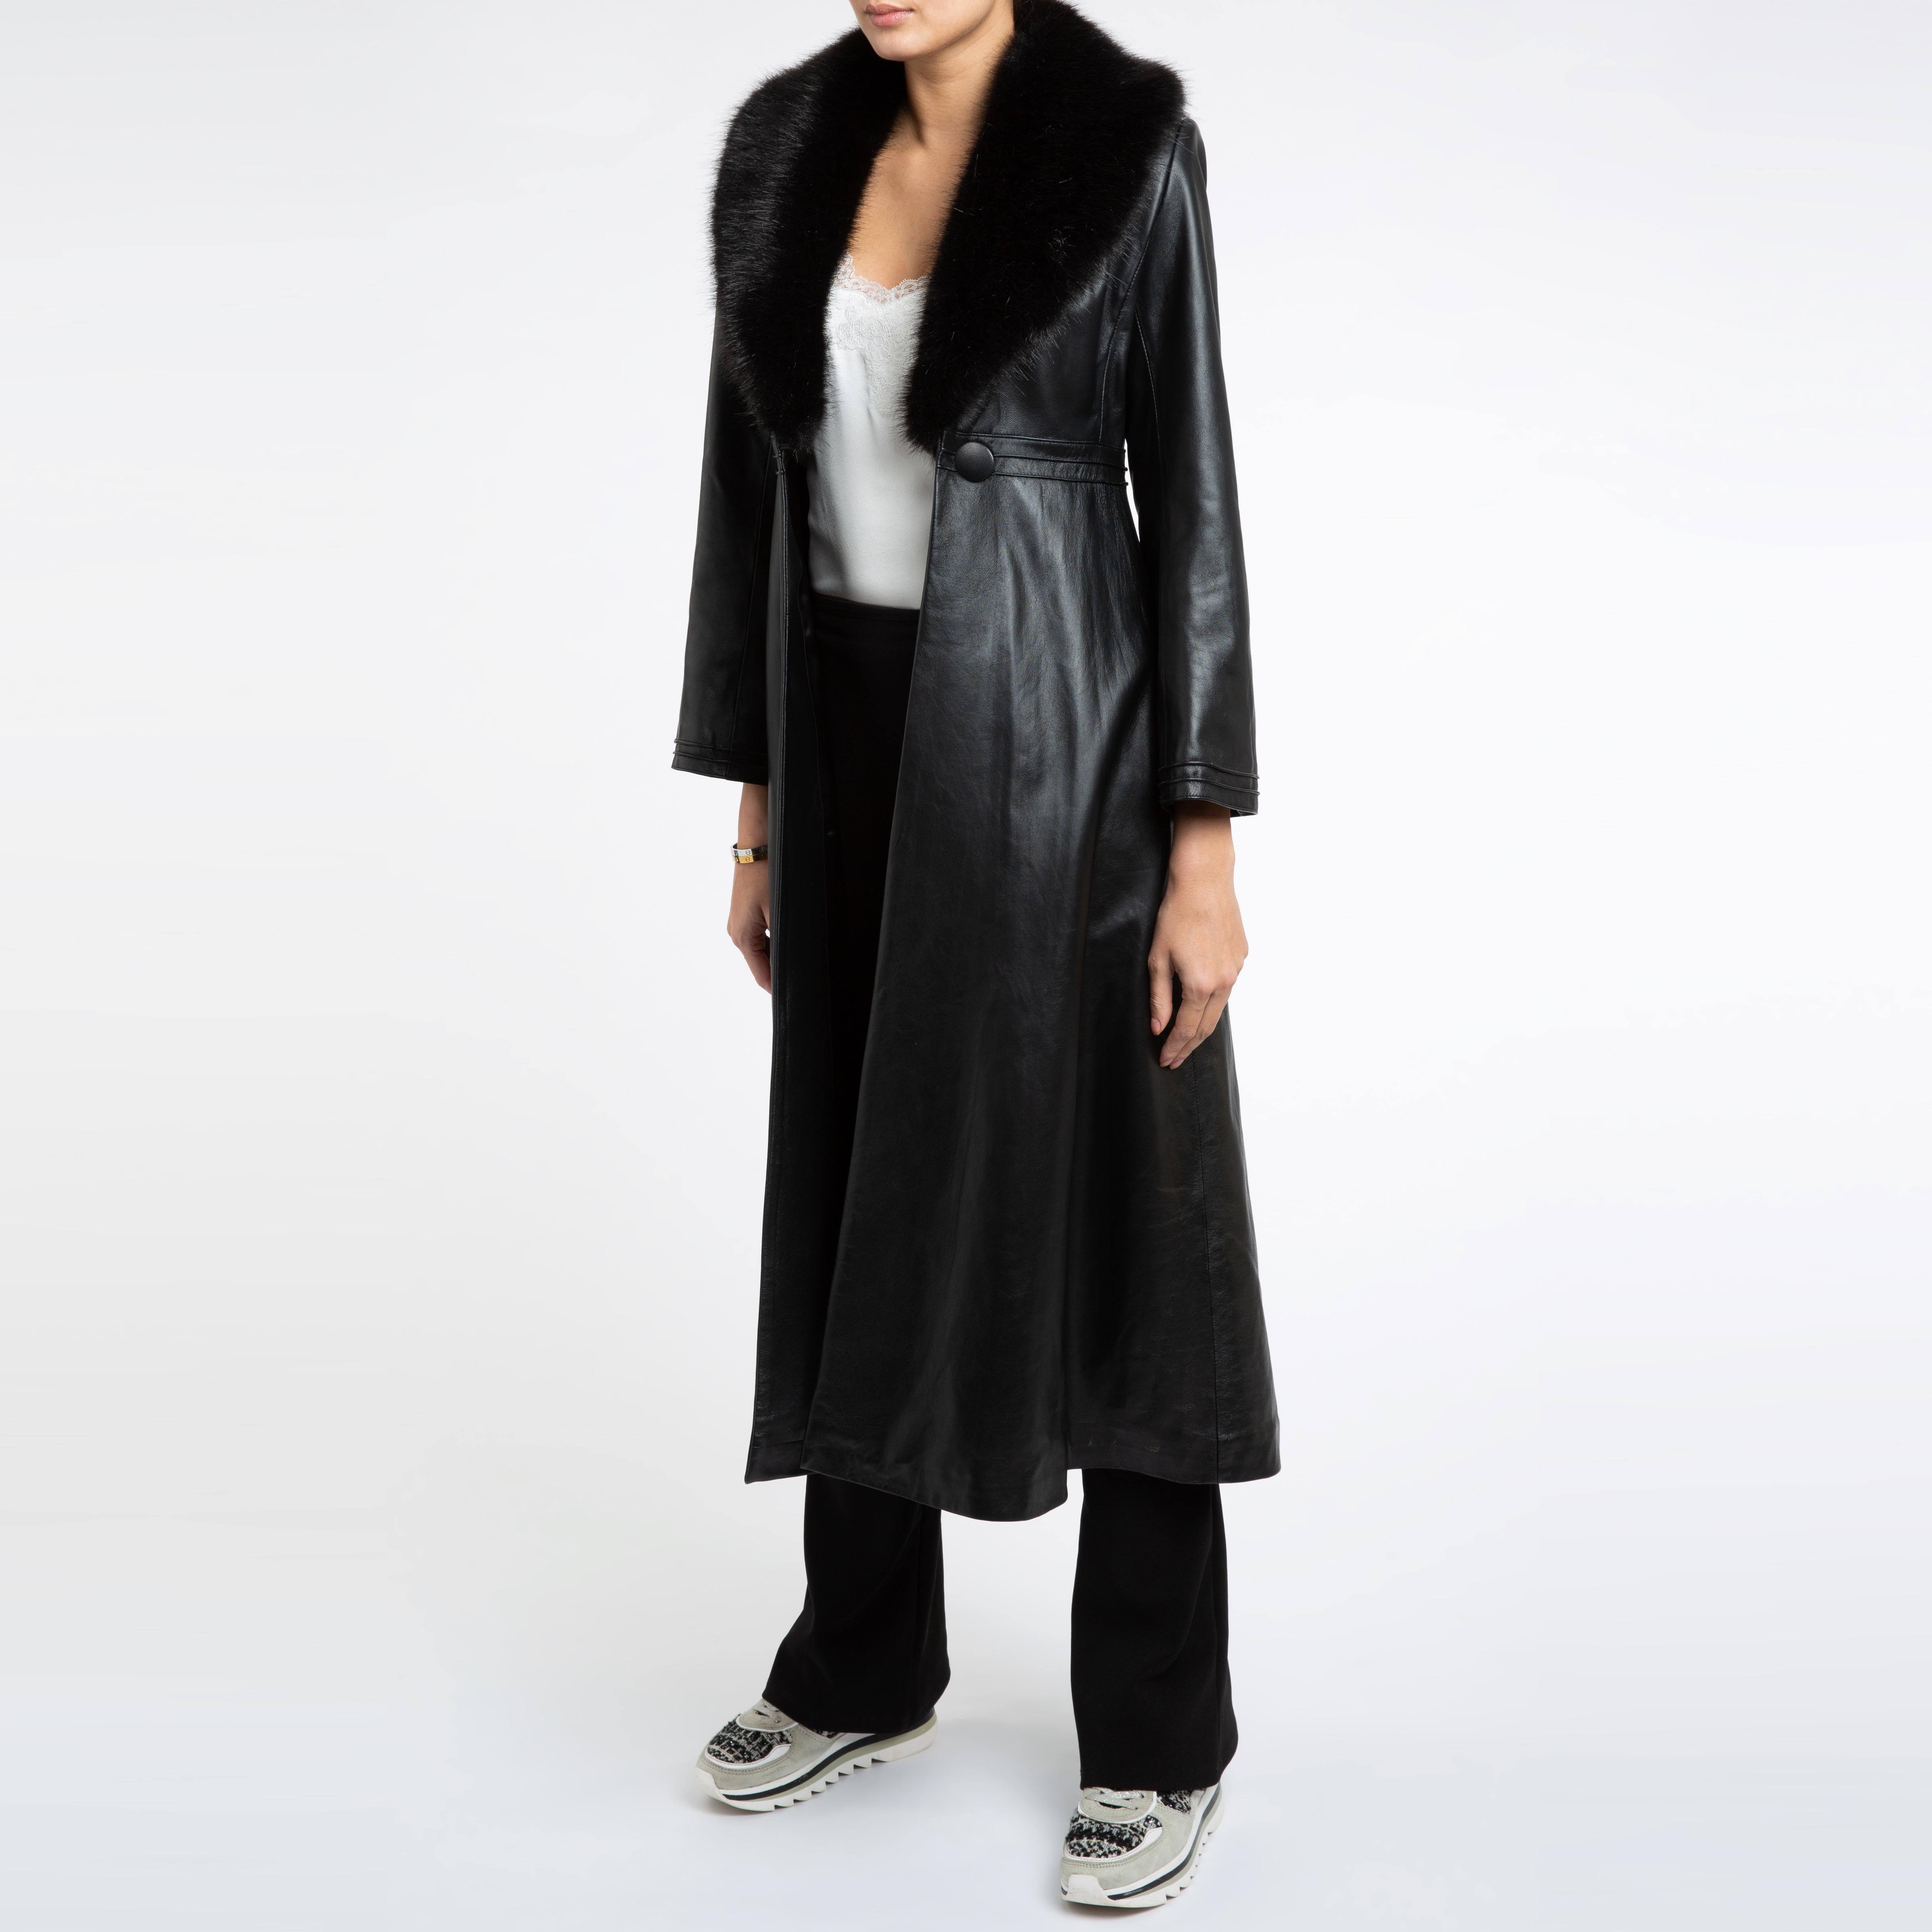 Women's Verheyen London Edward Leather Coat with Faux Fur Collar in Black - Size uk 8